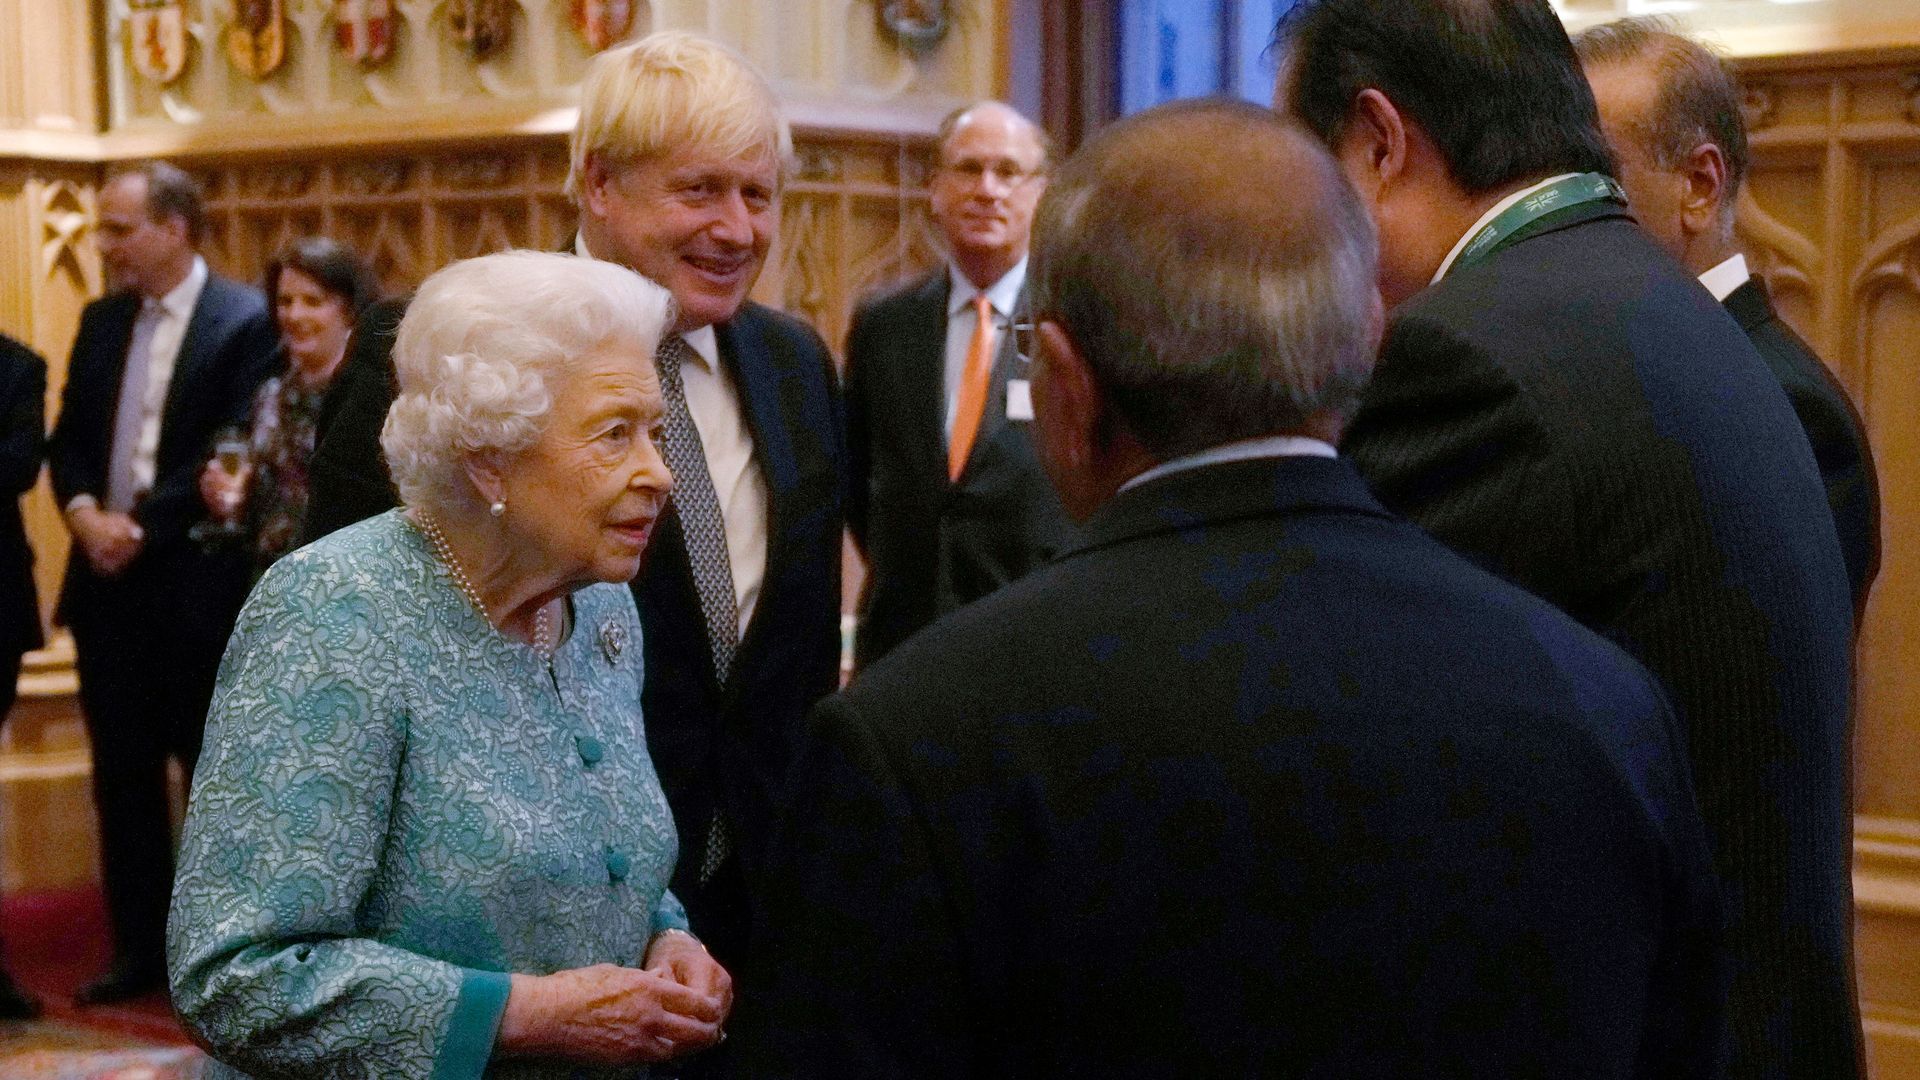 Photo of Queen Elizabeth II and Boris Johnson greeting guests inside Windsor Castle